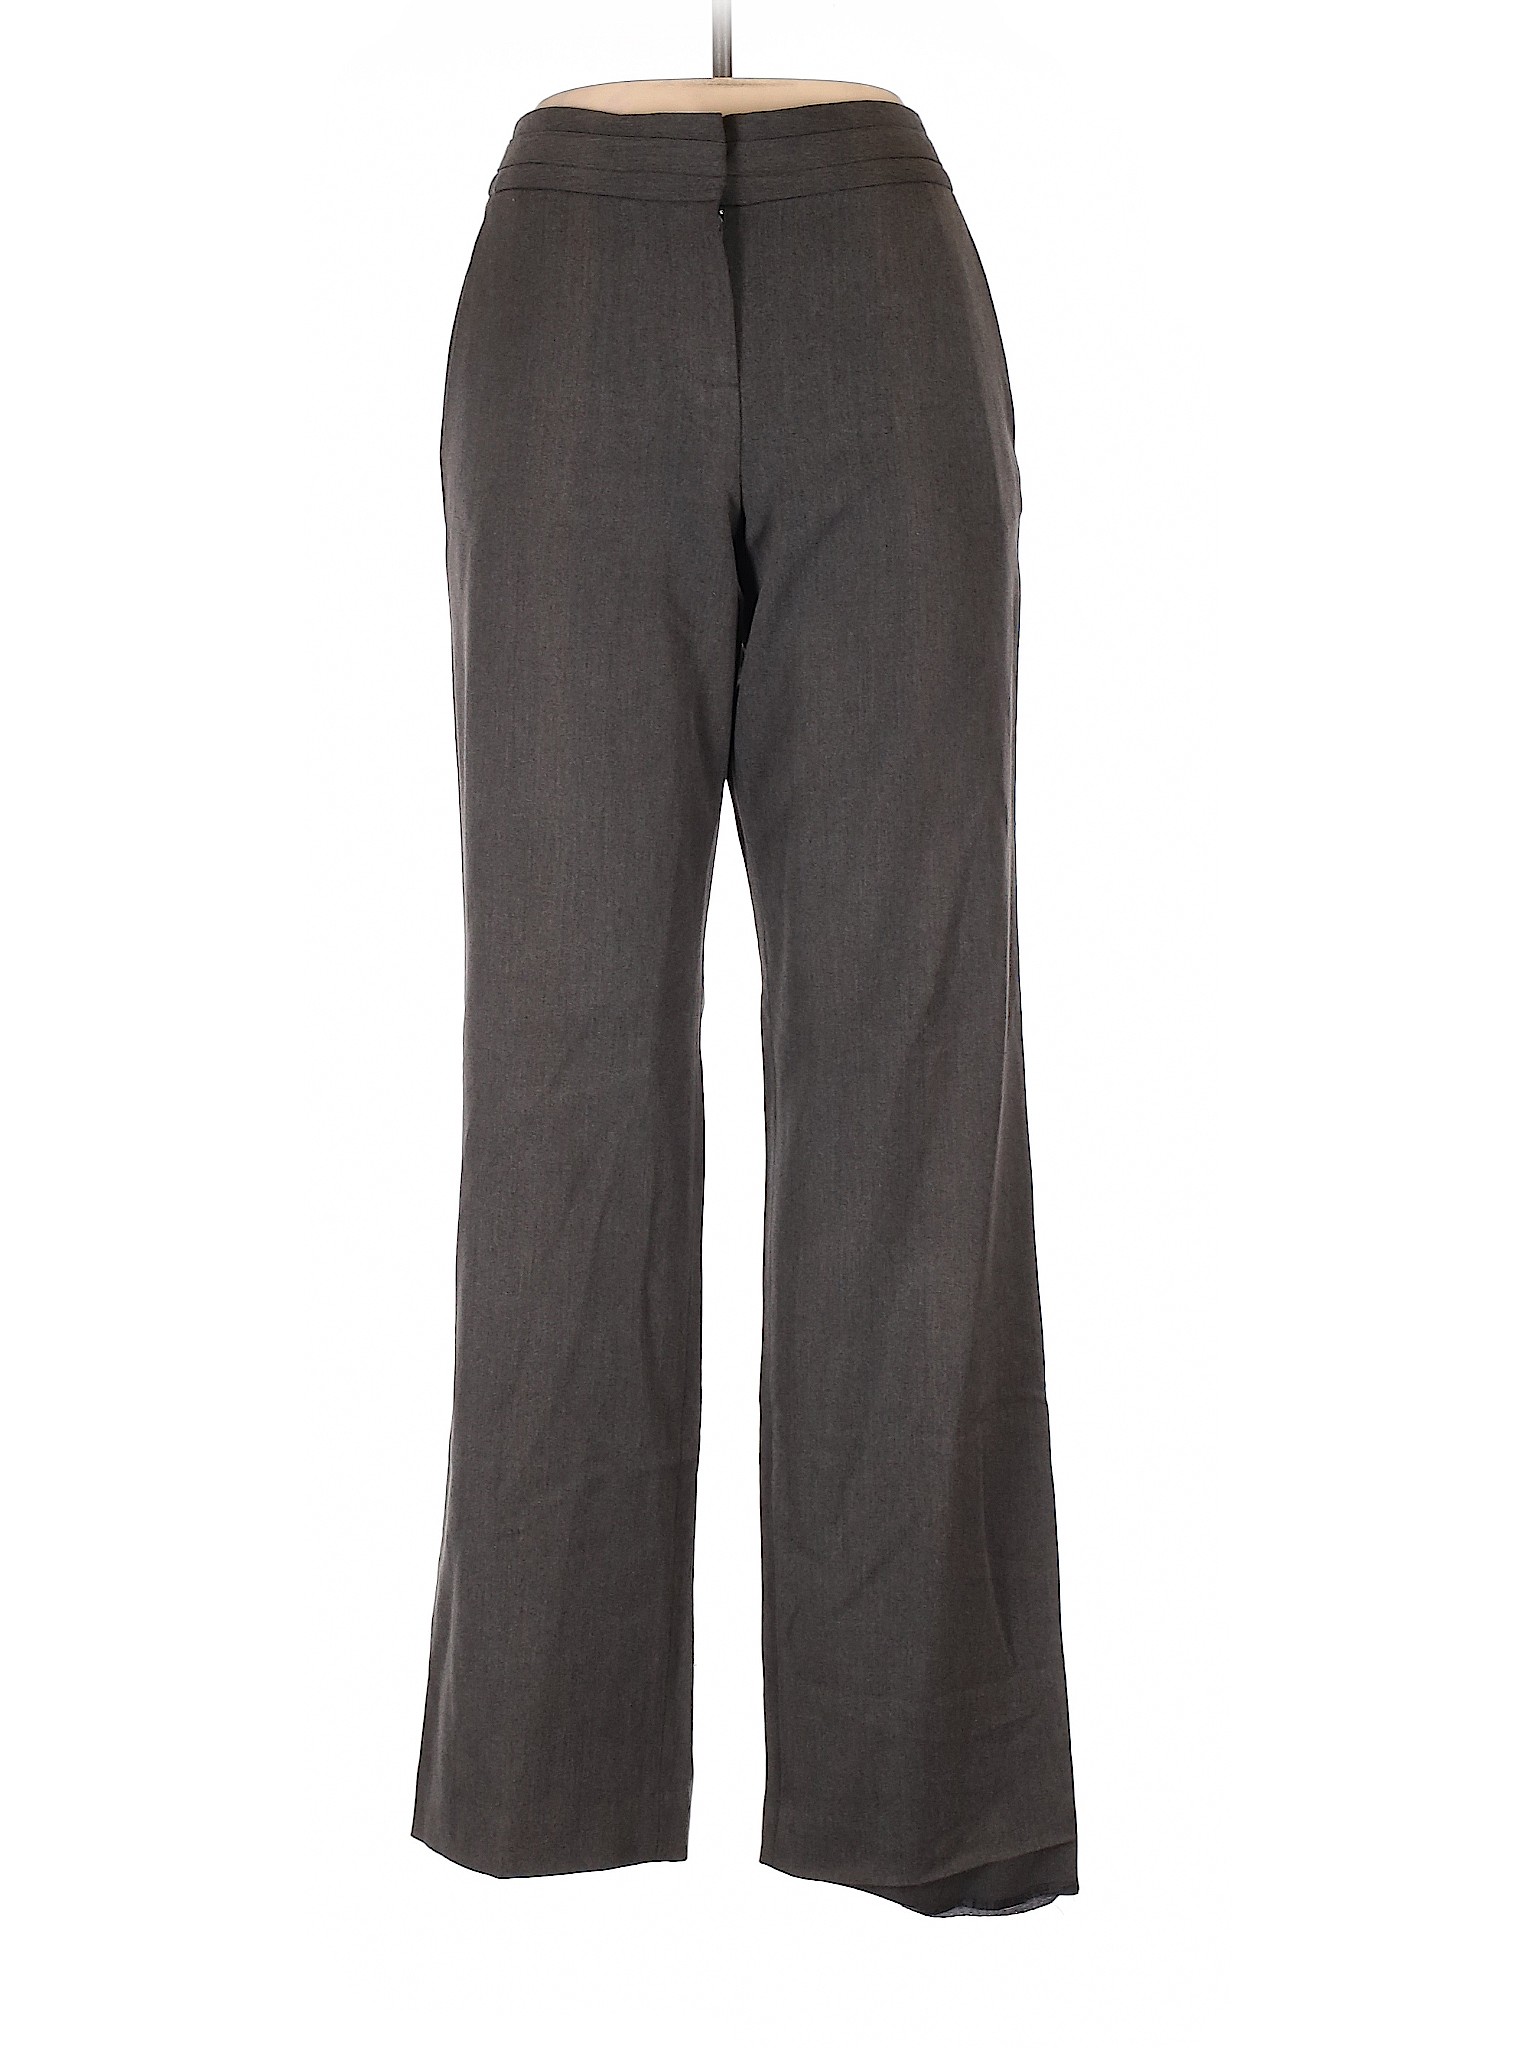 Sharagano Women Gray Dress Pants 6 | eBay